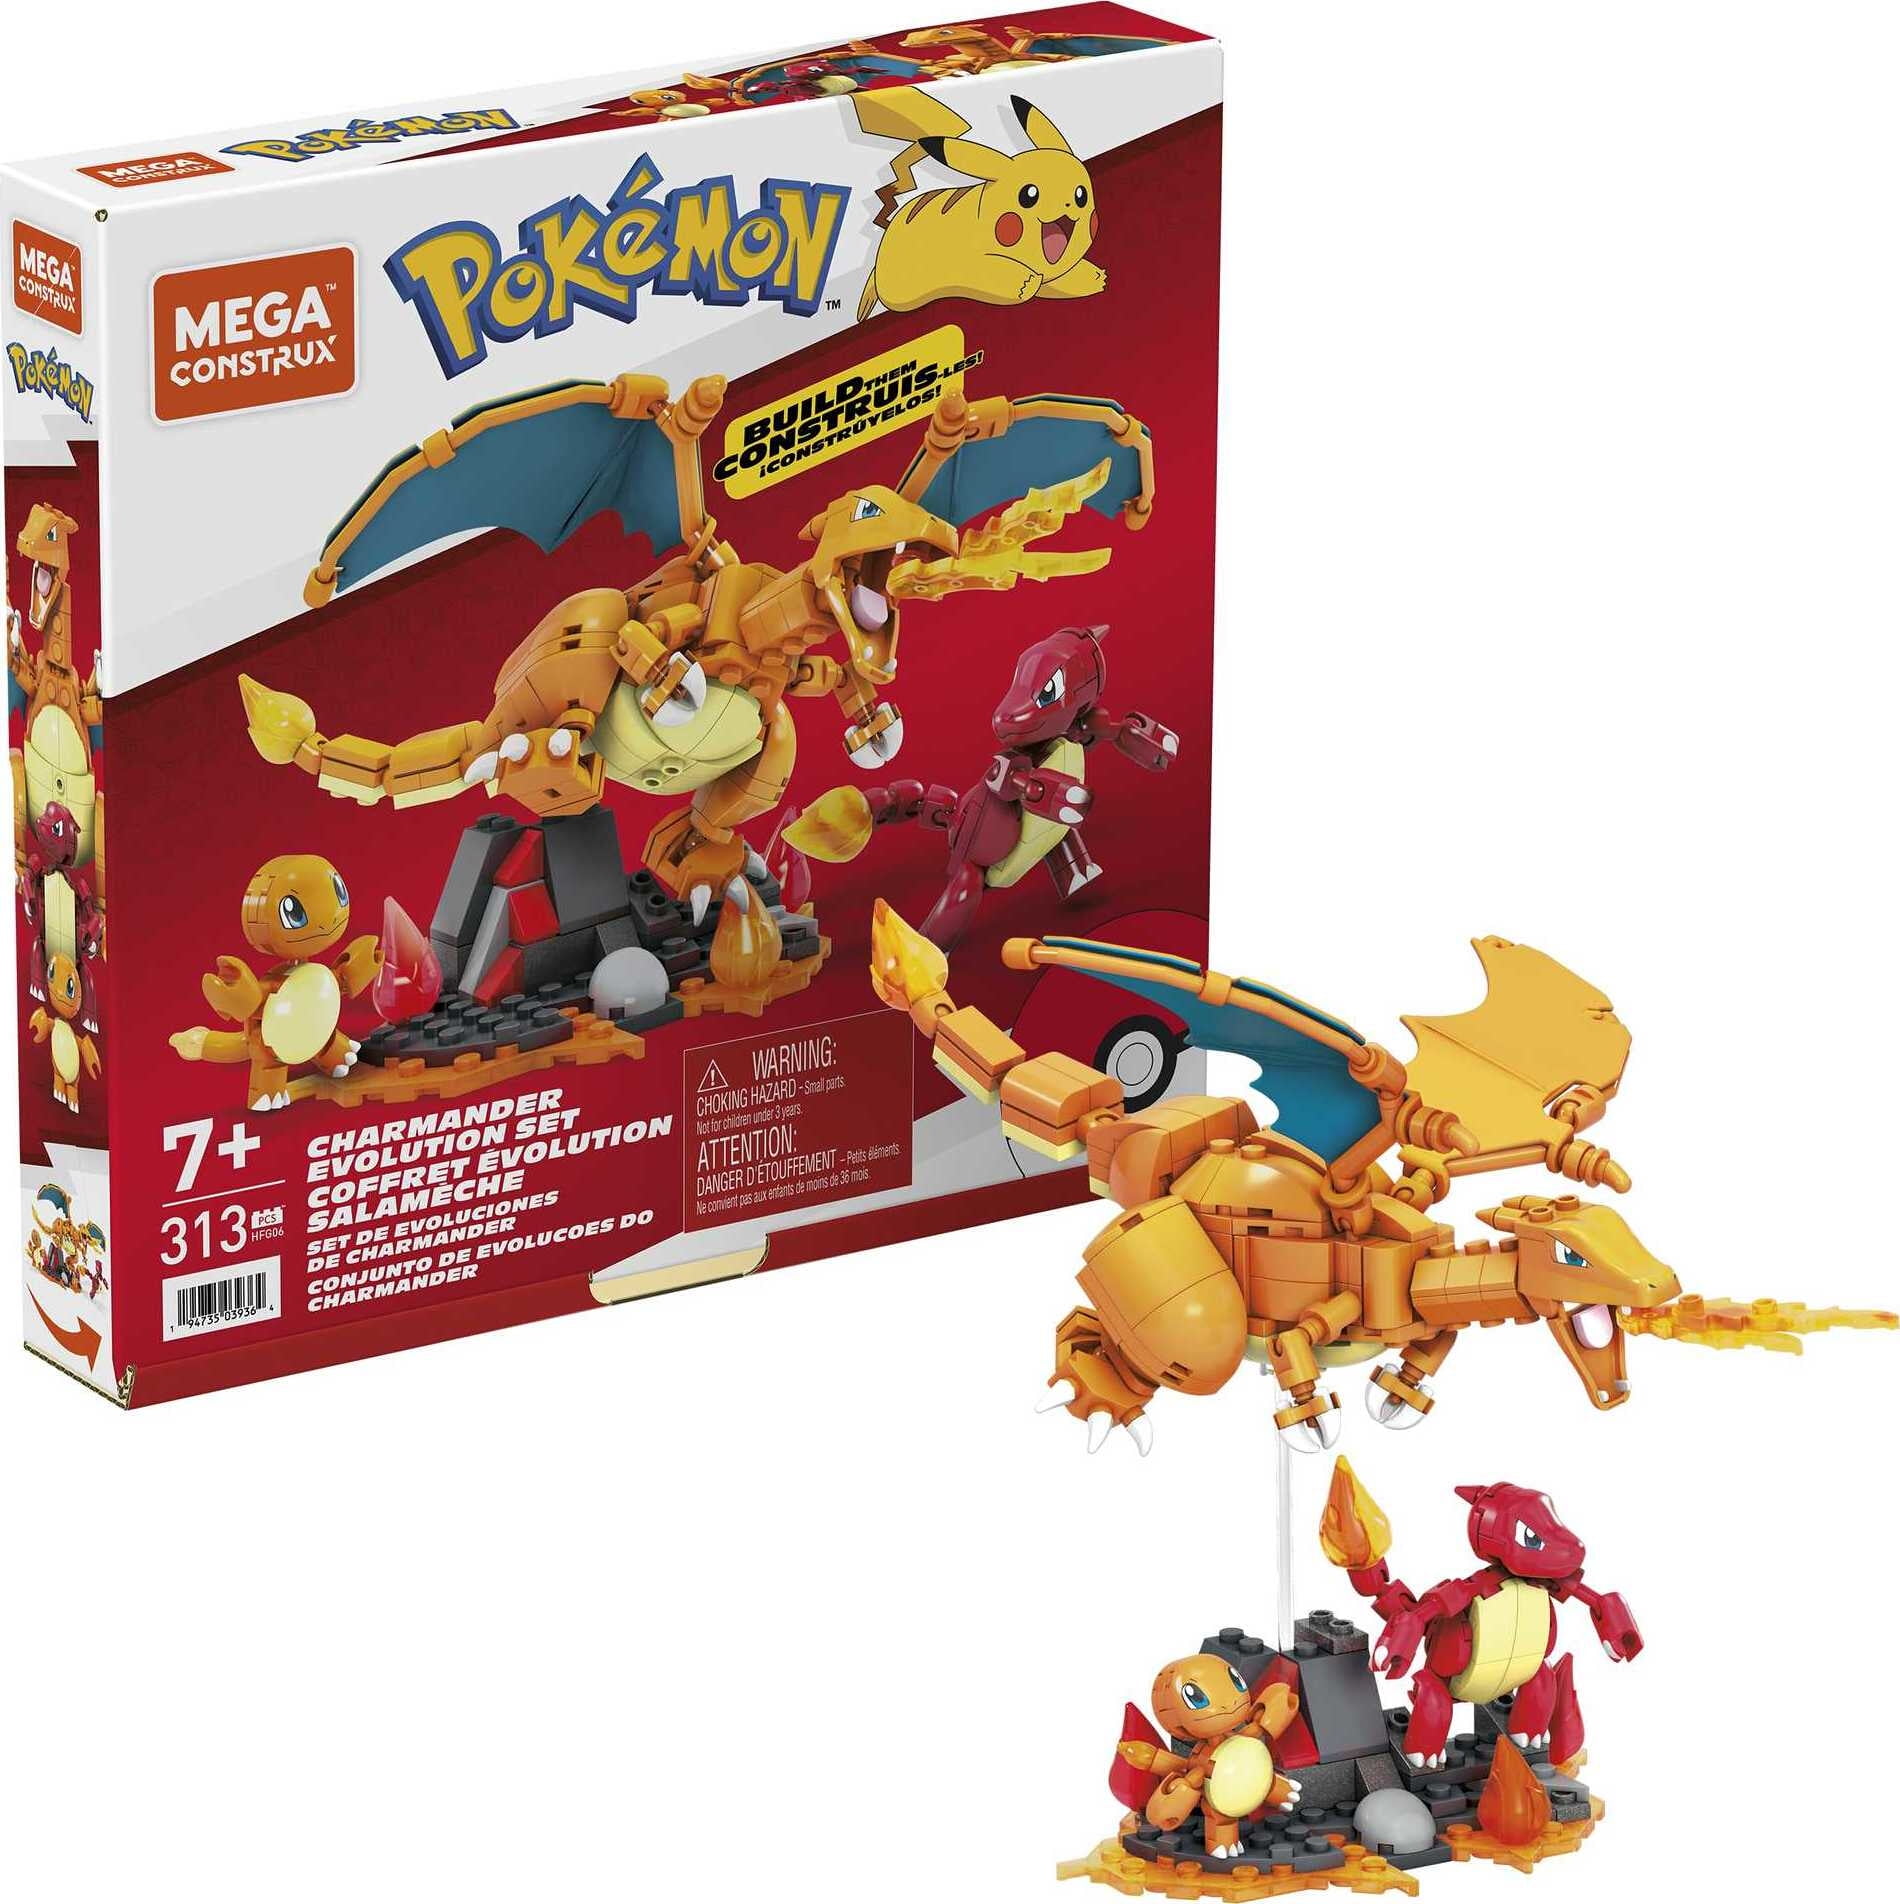 MEGA Pokemon Building Toy Kit Charmander Set with 3 Action Figures (300 Pieces) for Kids